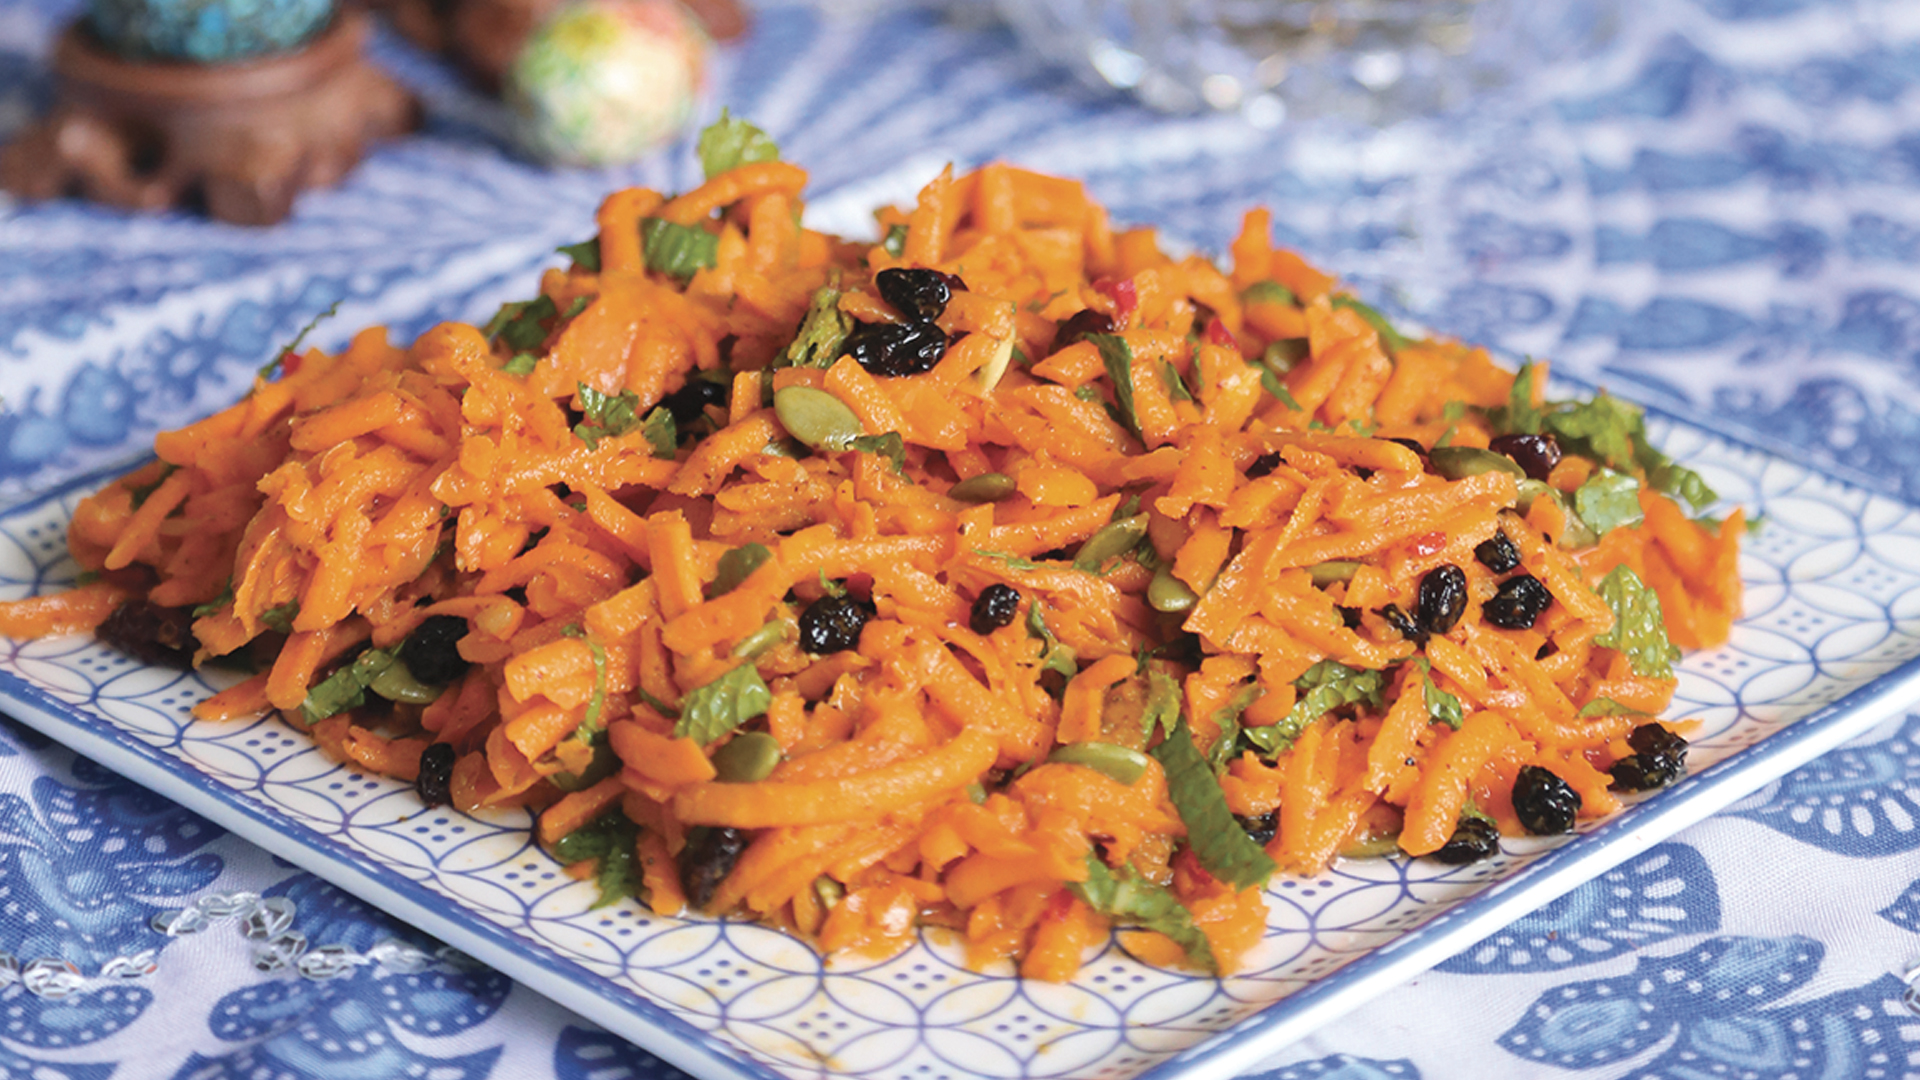 Gluten-free salad ideas: Persian carrot salad recipe